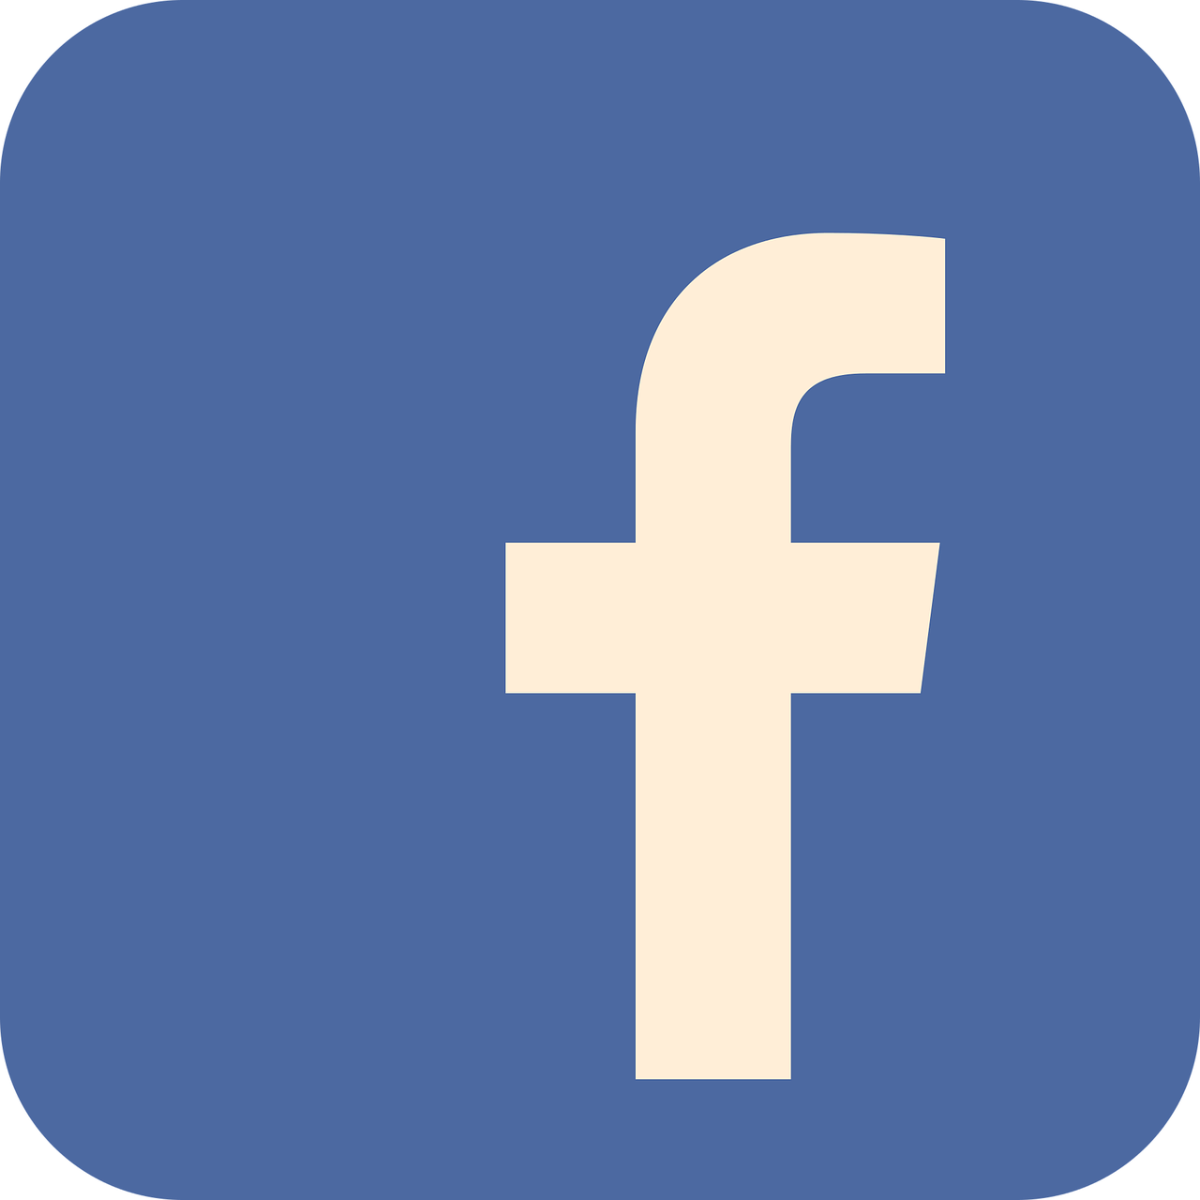 Sycor Technology Inc.'s Facebook